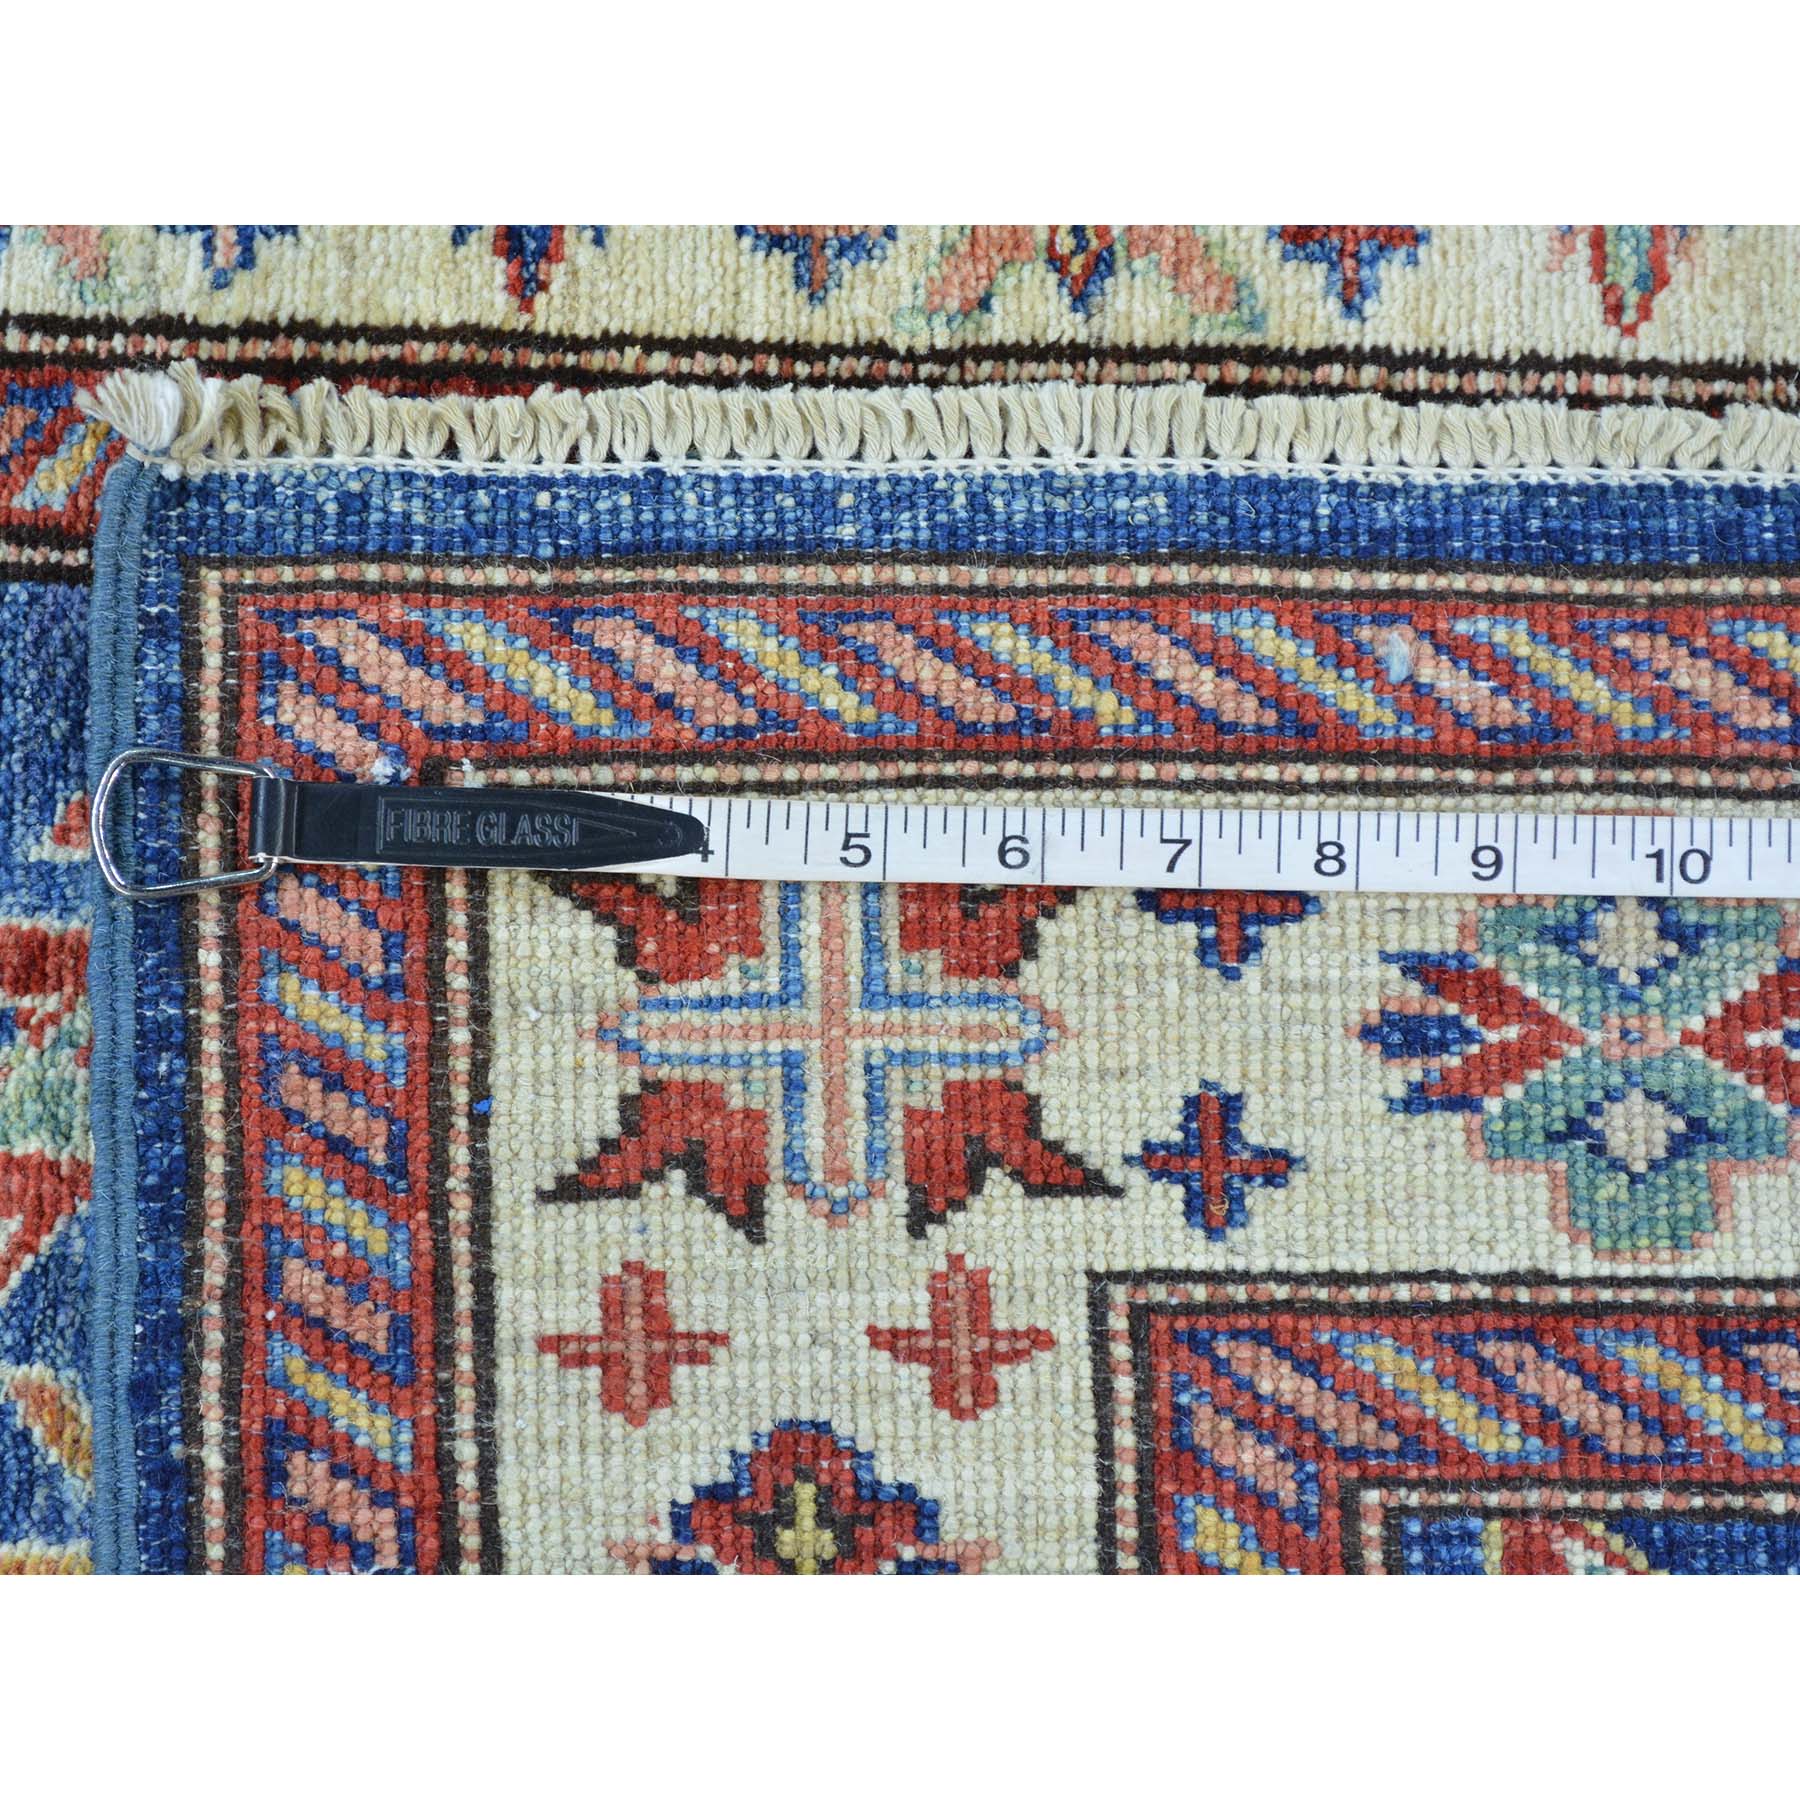 3- x 5- Denim Blue Super Kazak Hand Knotted 100 Percent Wool Oriental Rug 